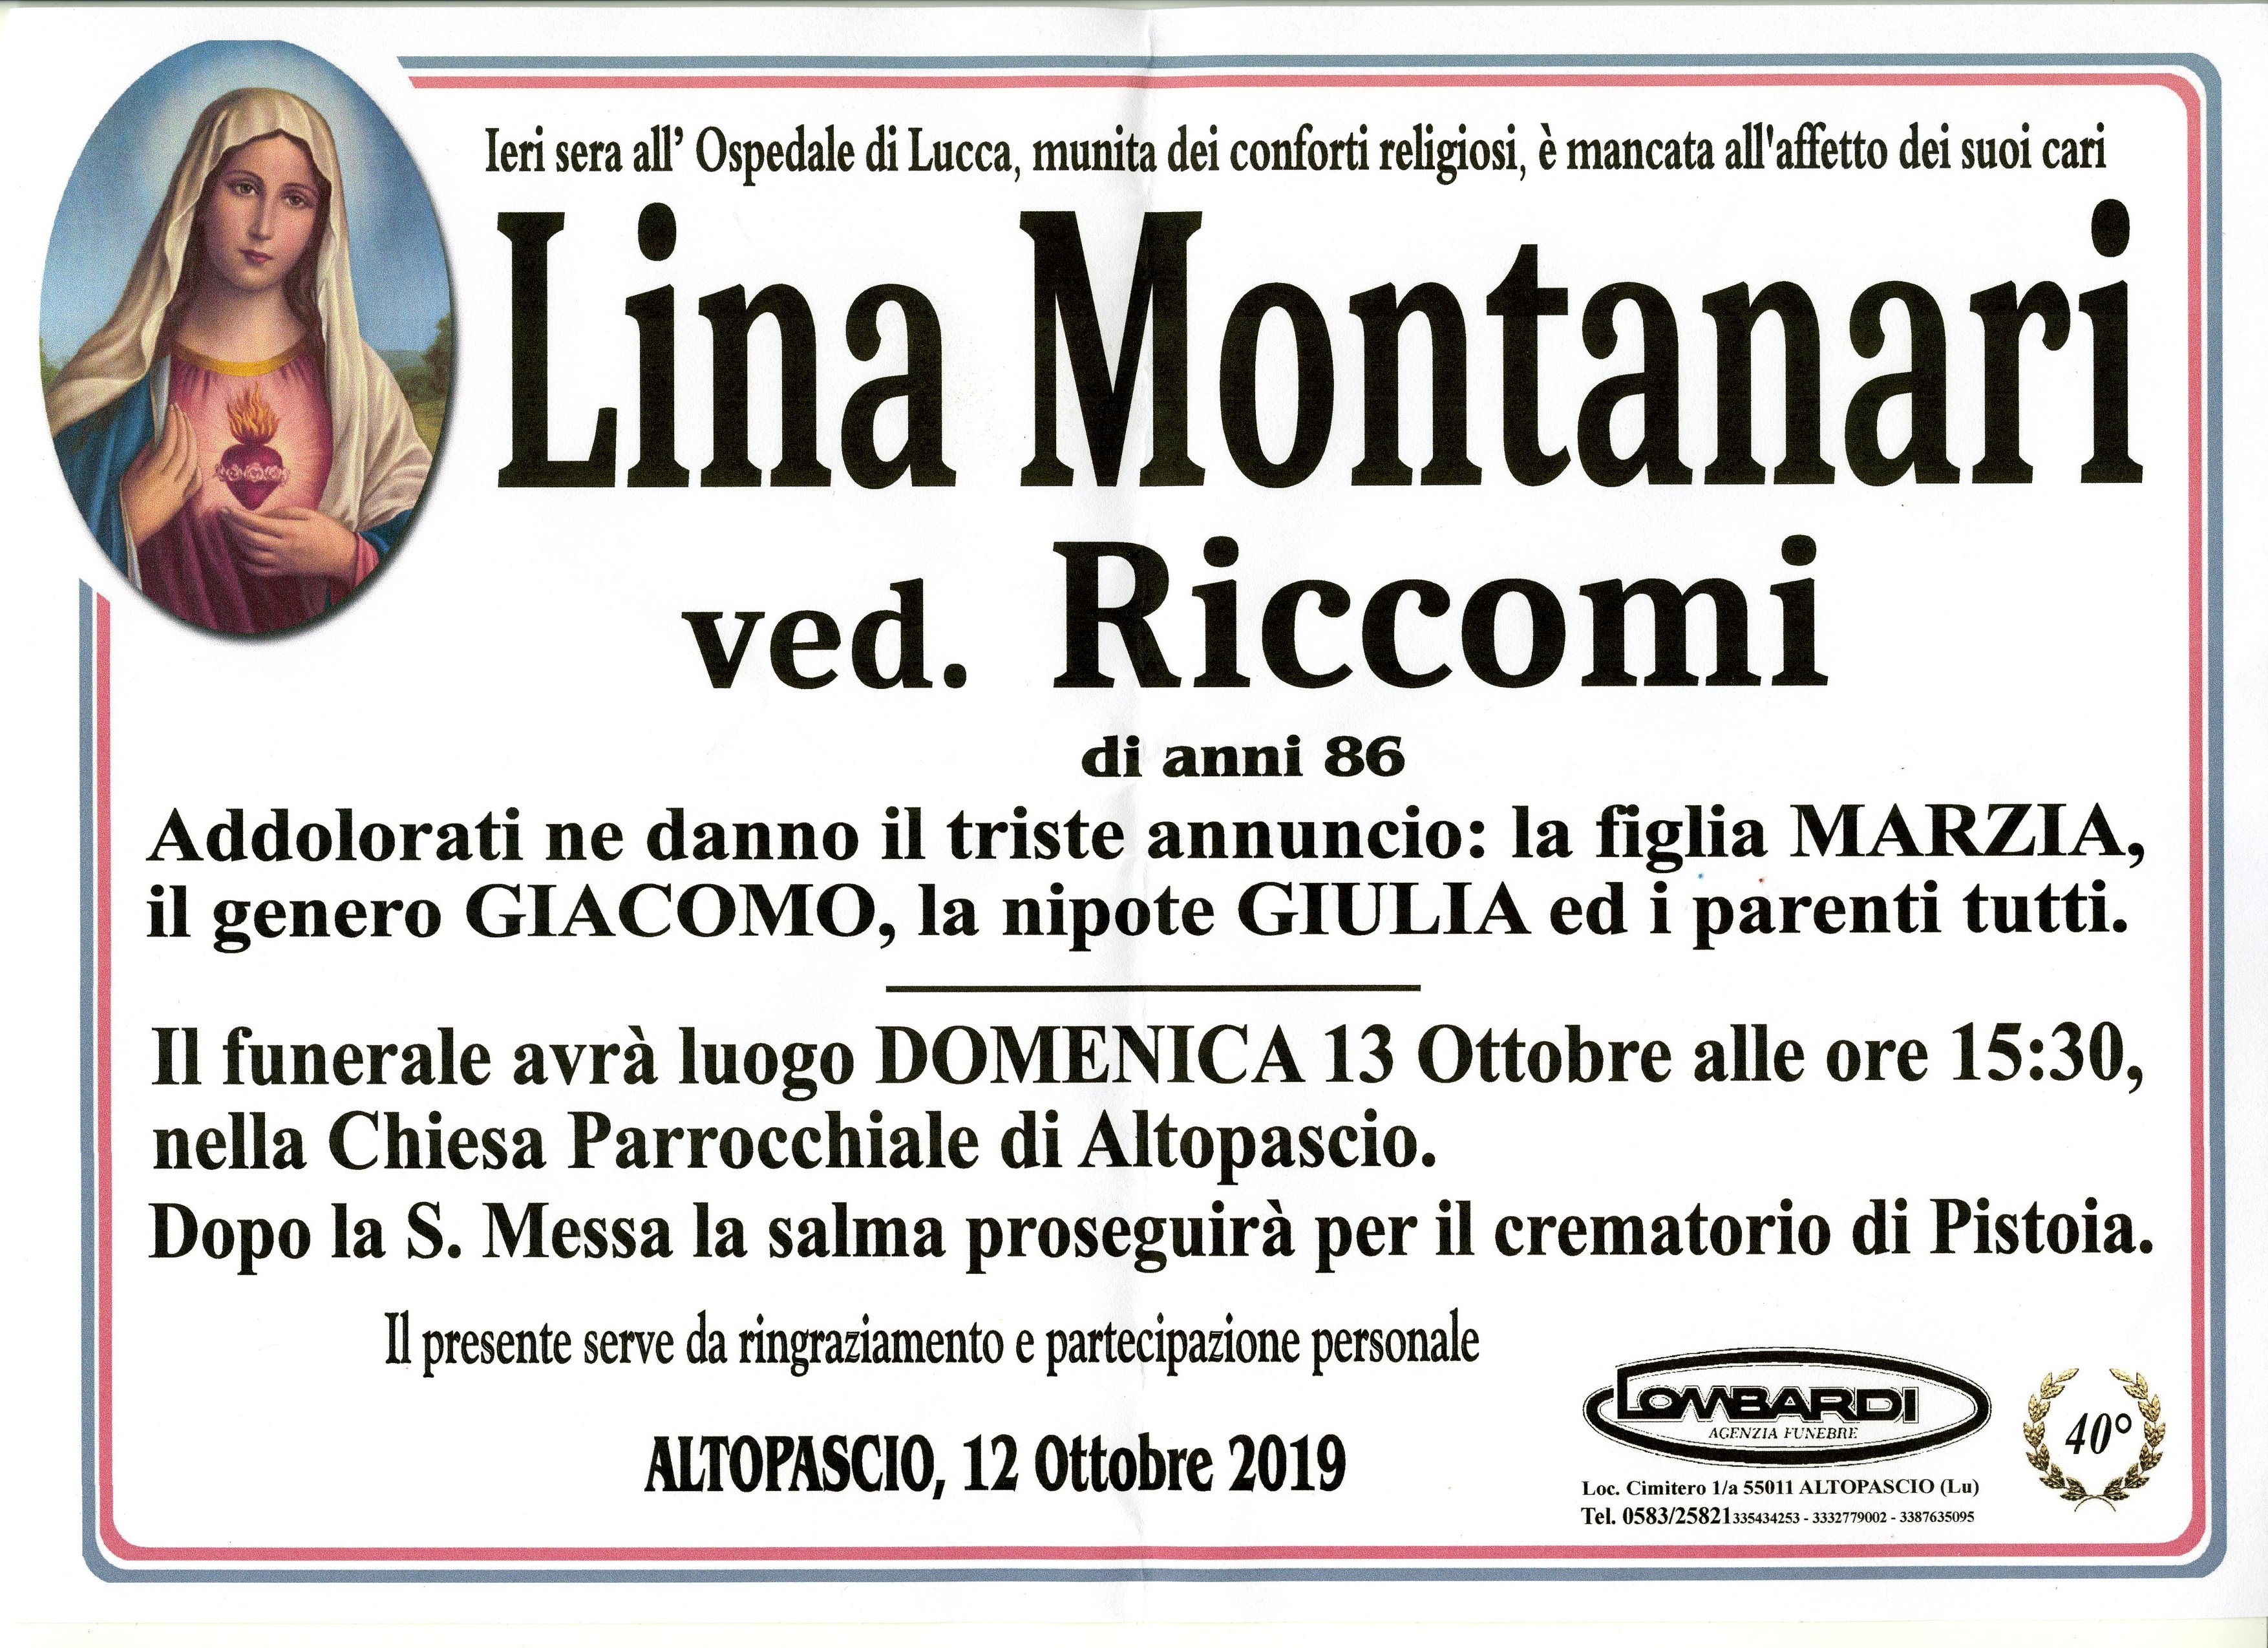 Lina Montanari ved. Riccomi